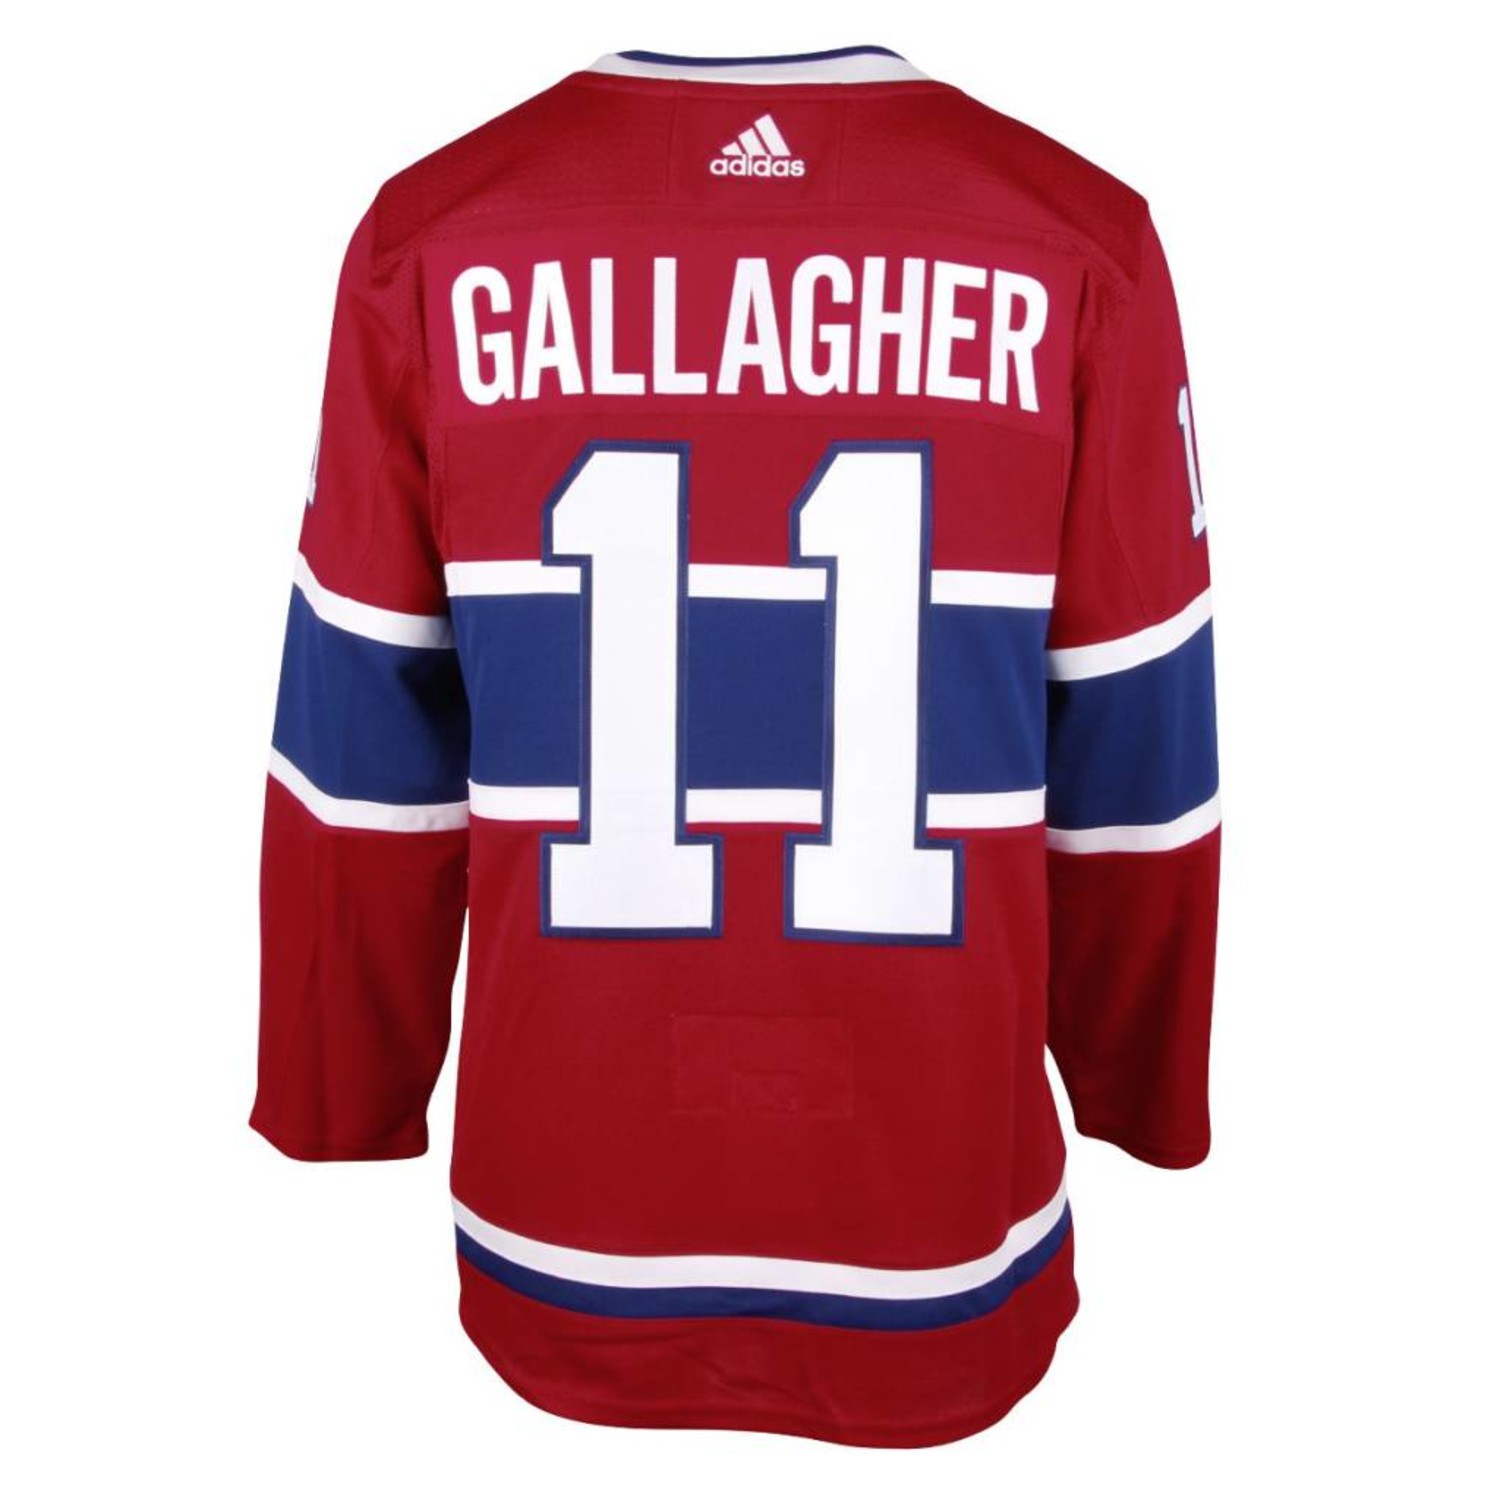 gallagher jersey habs